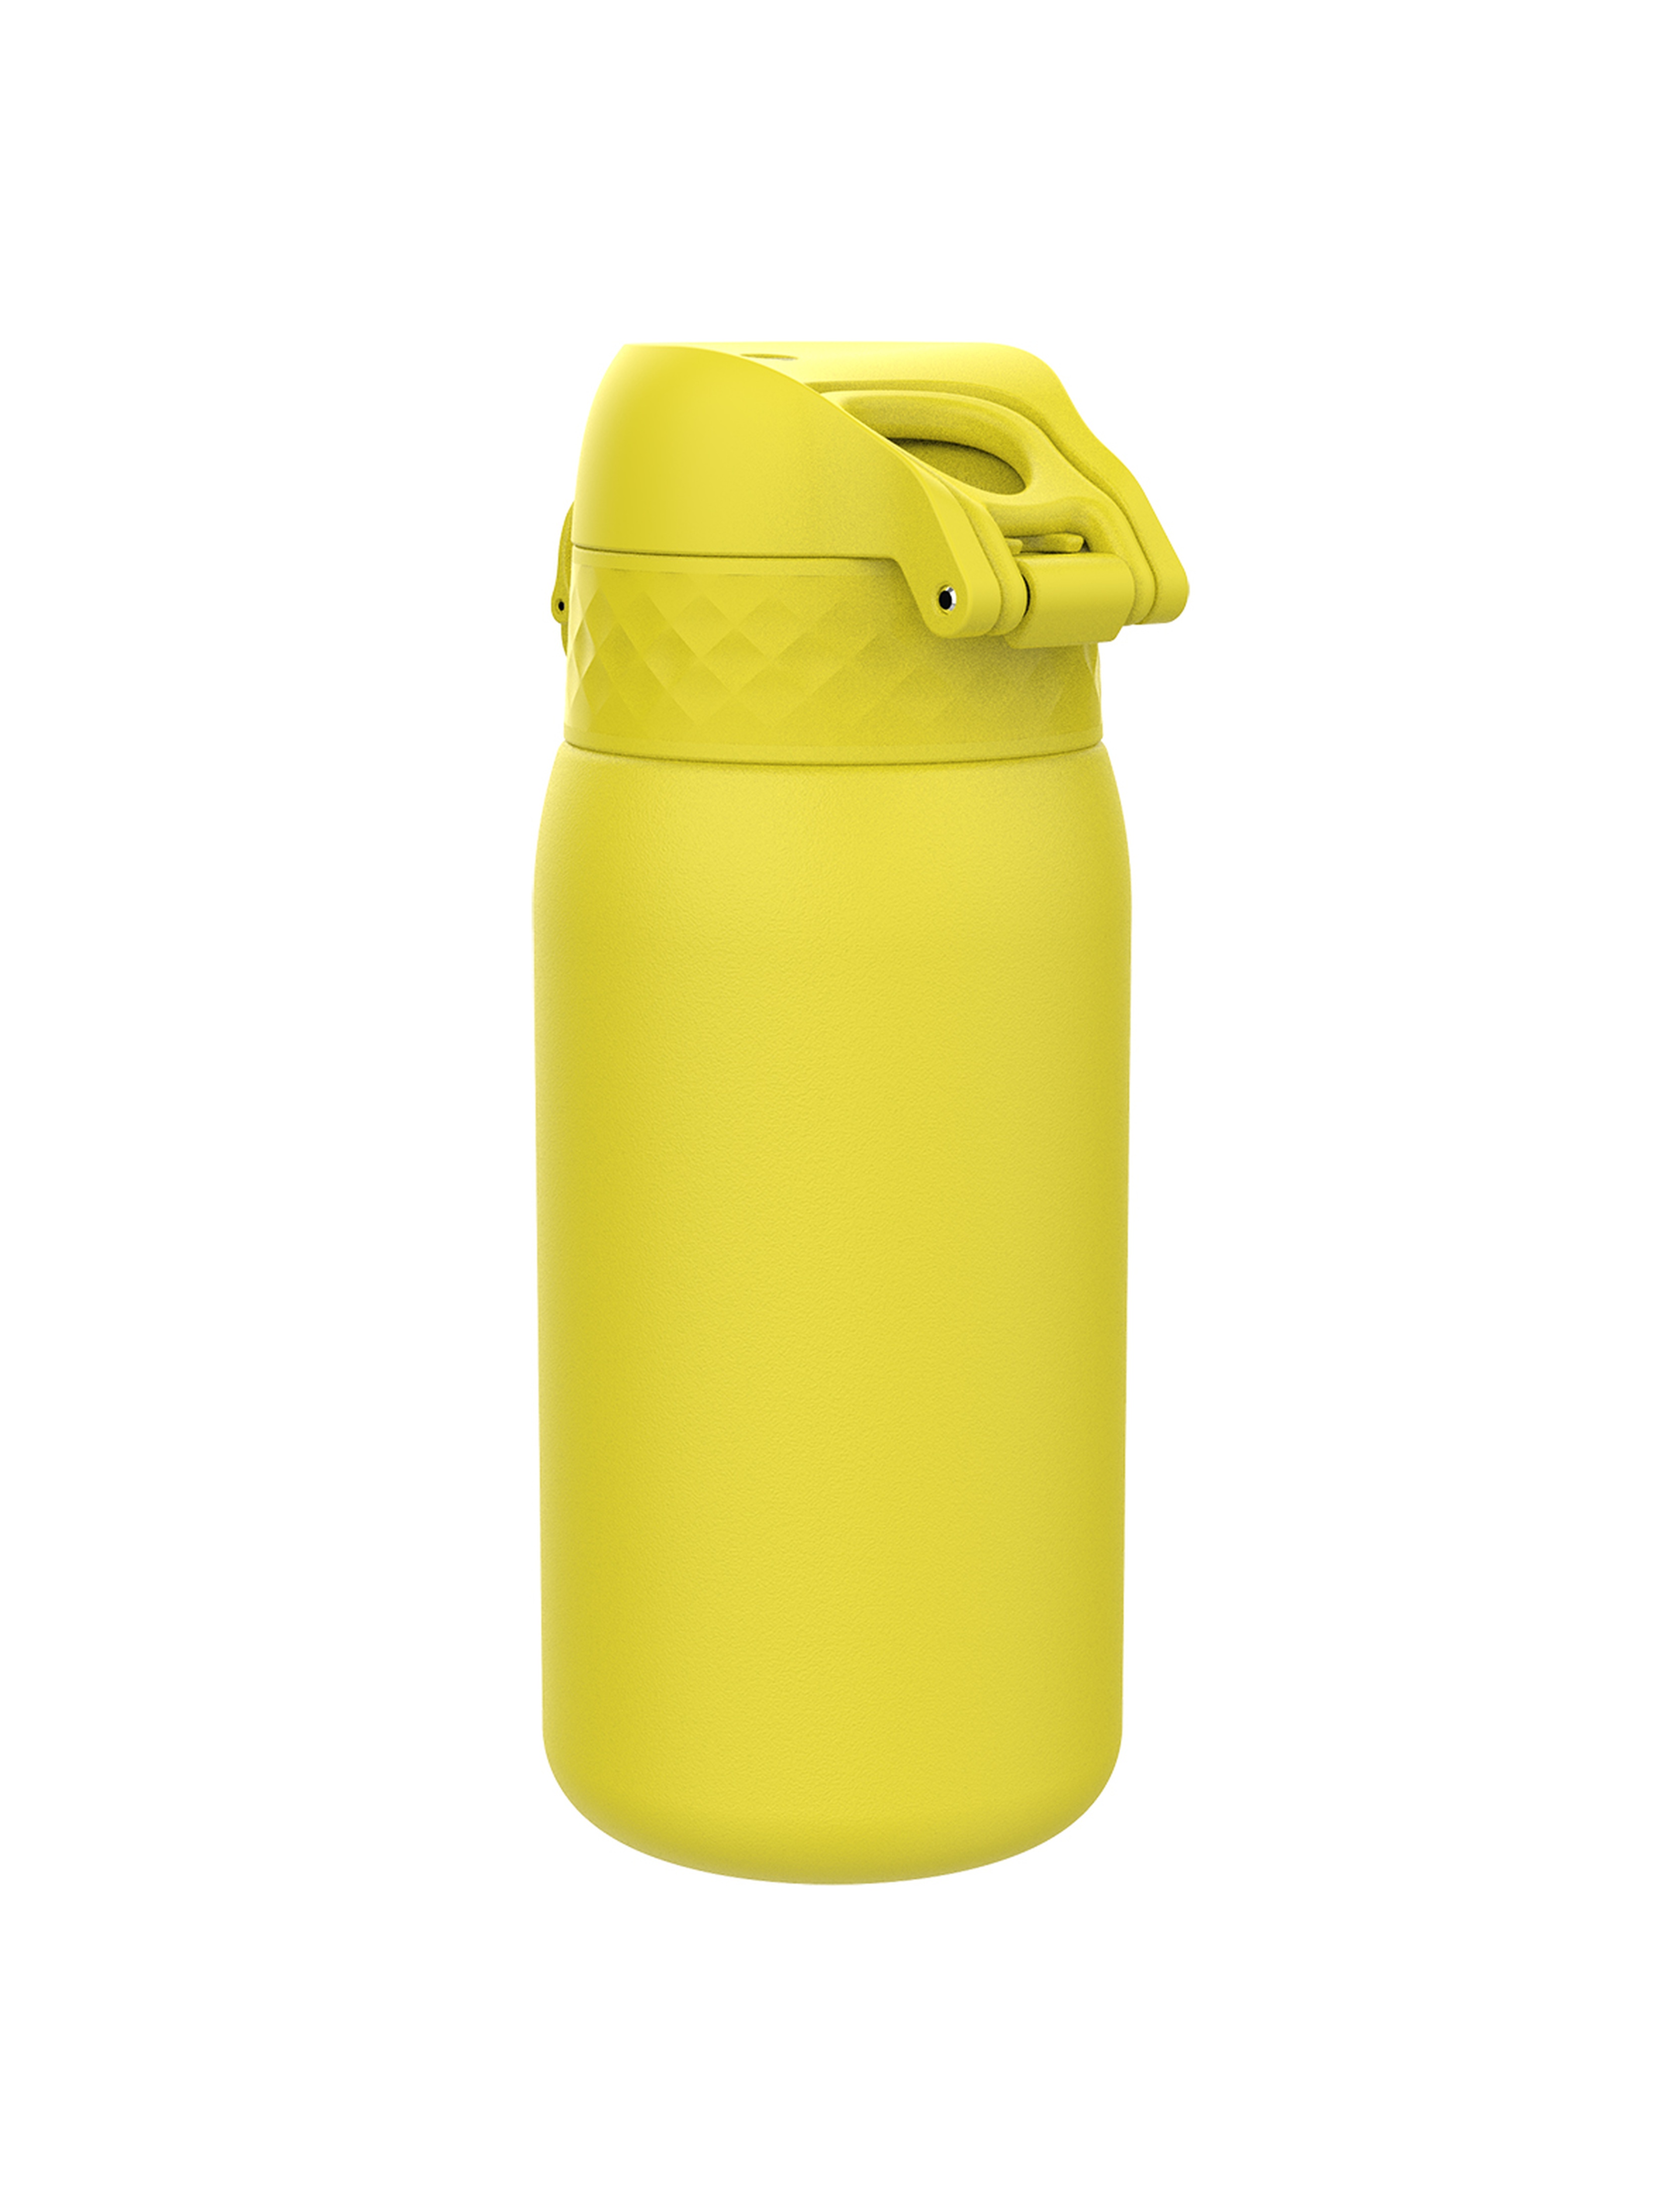 Butelka na wodę ION8 Double Wall Yellow 320ml - żółta